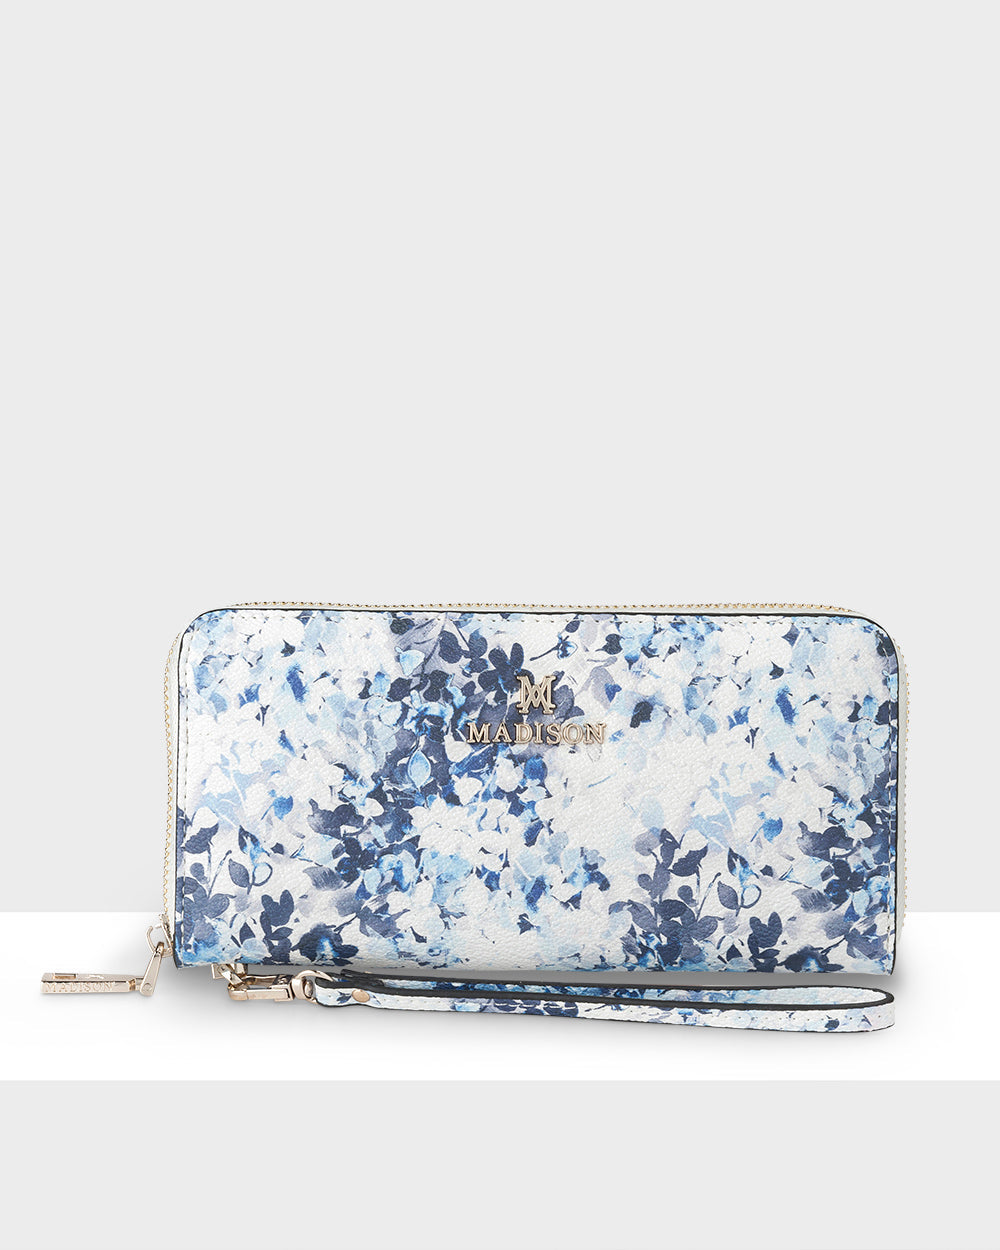 Handbag, Wallet, Coinpurse & Personalisation Charm Giftbox - Grace Dome Satchel & Mini Coinpurse-6